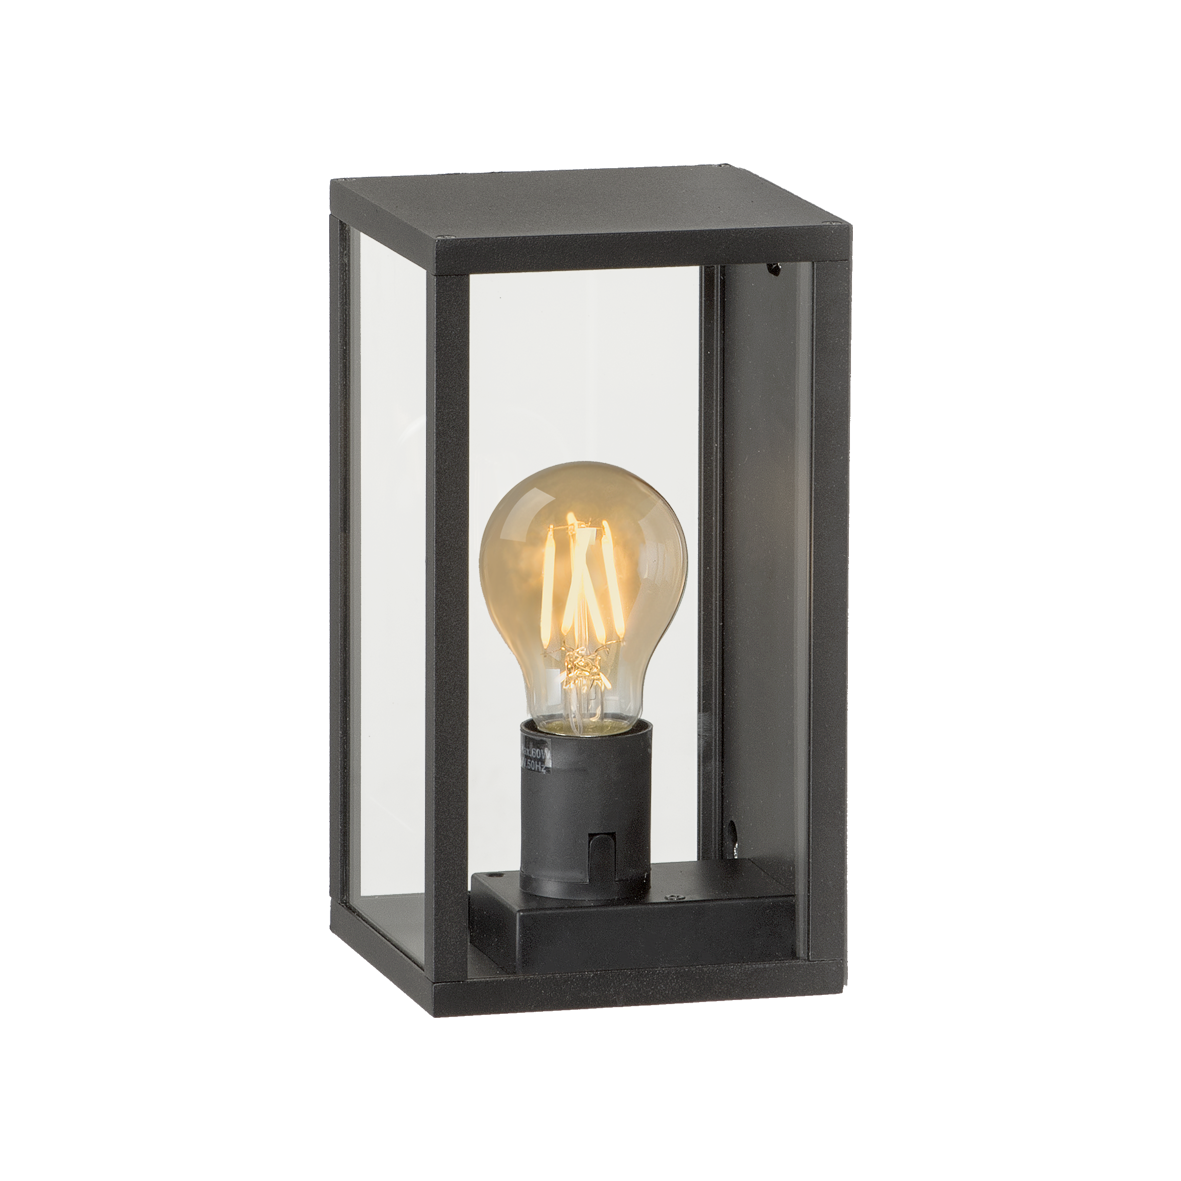 ALDEBARAN Wandlampe ALU schwarz 120 x 220 mm. 12 Volt. Filament 4 Watt 280 lumen. warm weiß